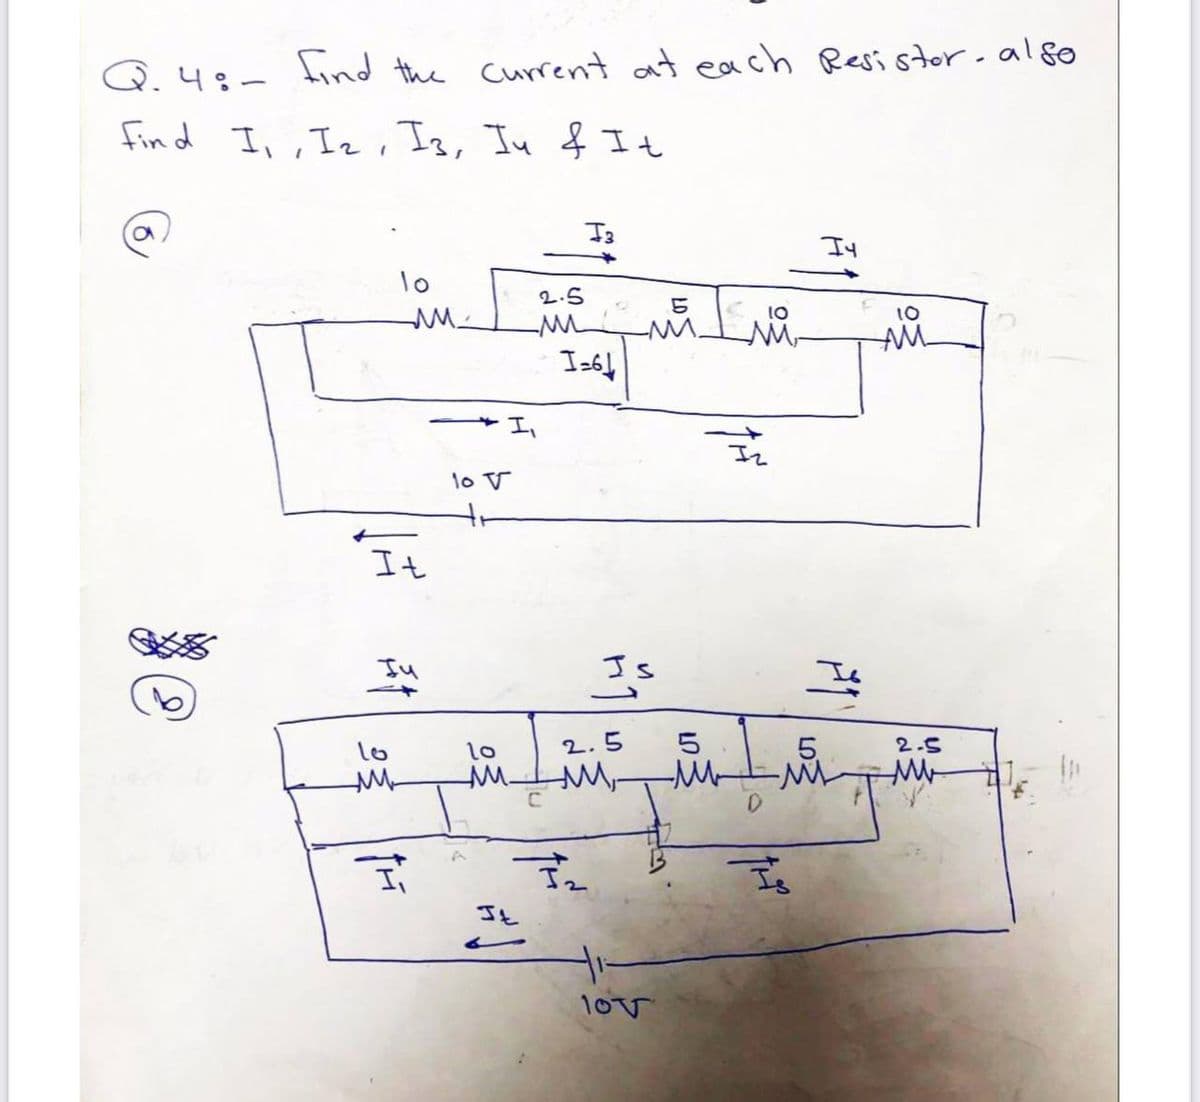 Q.48-
tind the current at each Resistor- al8o
fin d I,, Iz, I3, In f It
lo
2.5
10
10
AM-
I 264
It
Ju
Is
5.
W-
lo
1o
2.5
2.5
Ii
